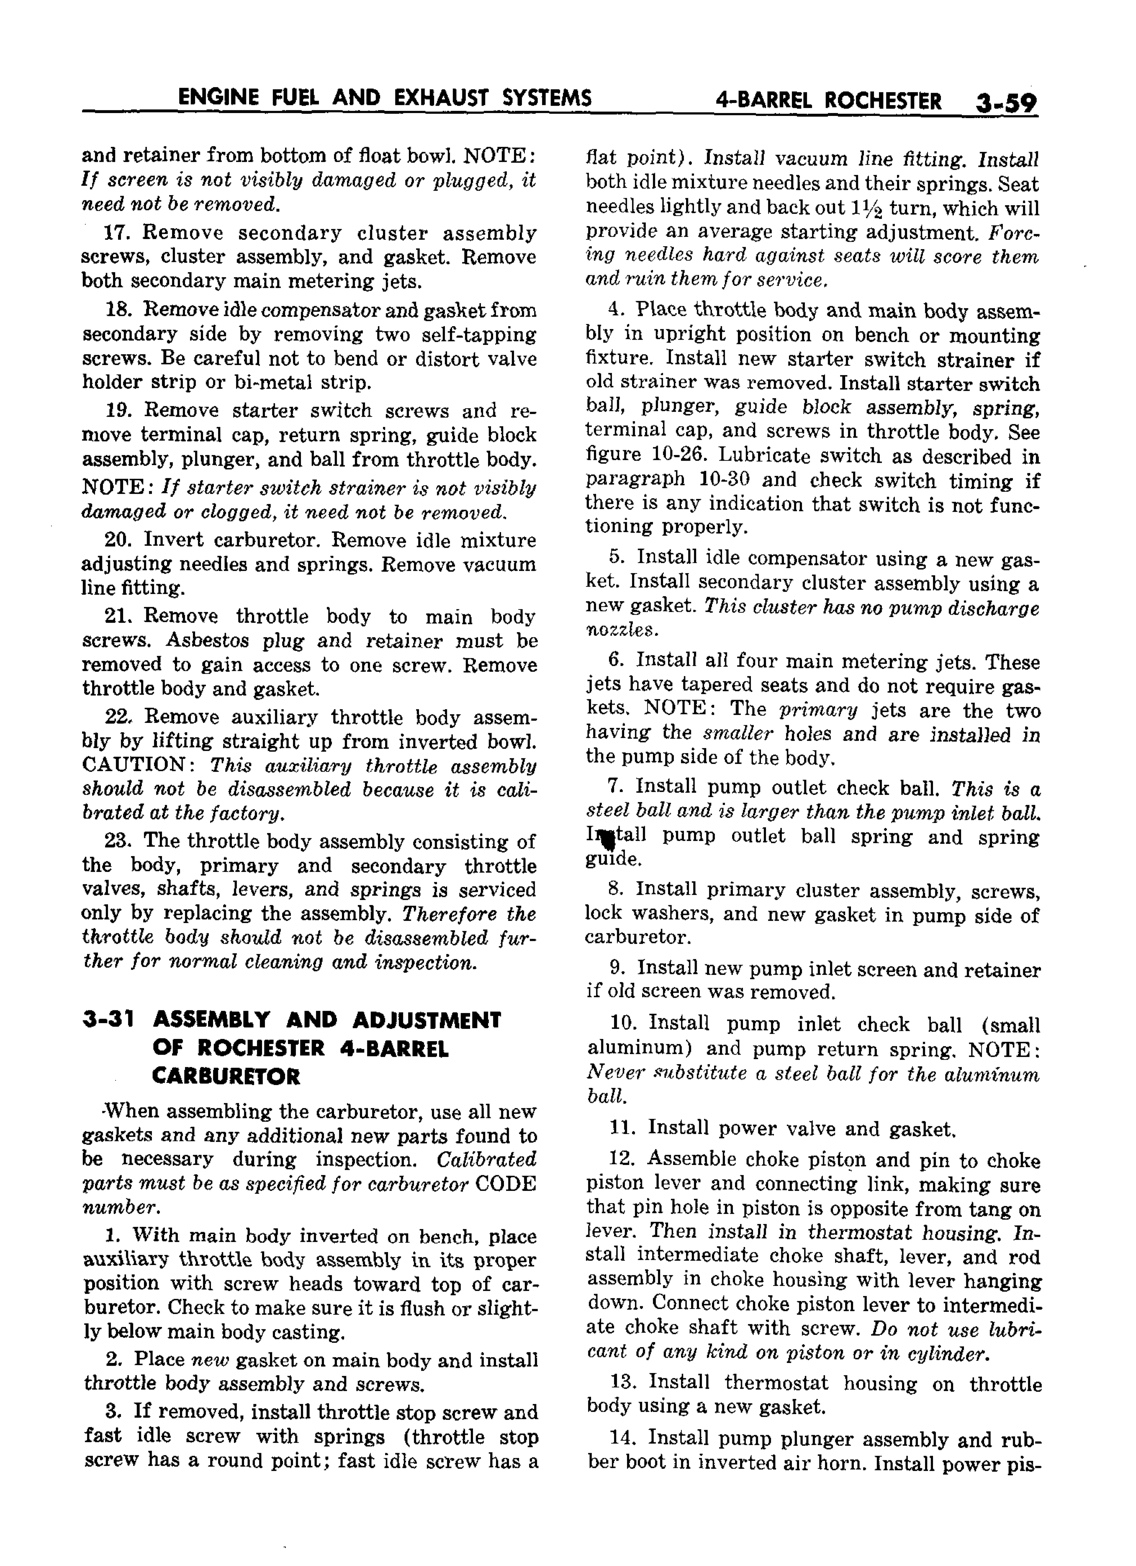 n_04 1959 Buick Shop Manual - Engine Fuel & Exhaust-059-059.jpg